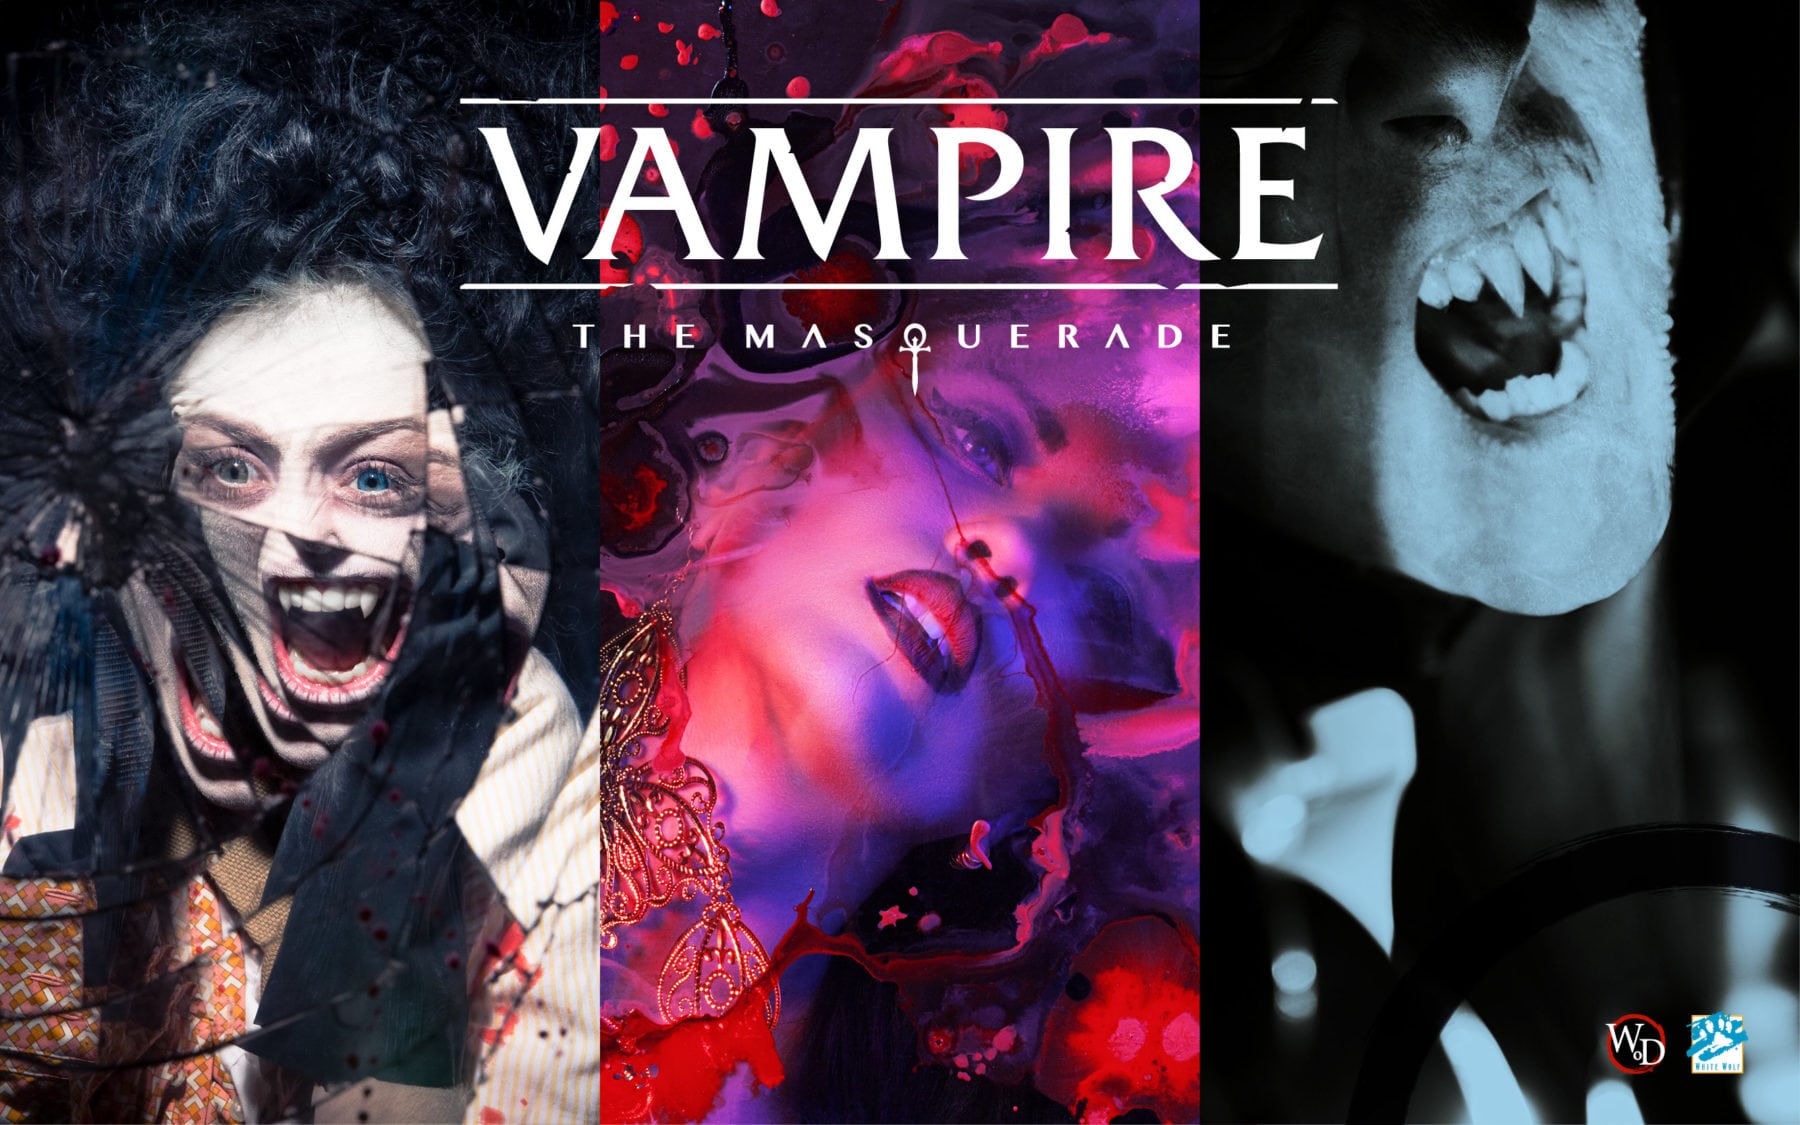 vampire the masquerade books pdf